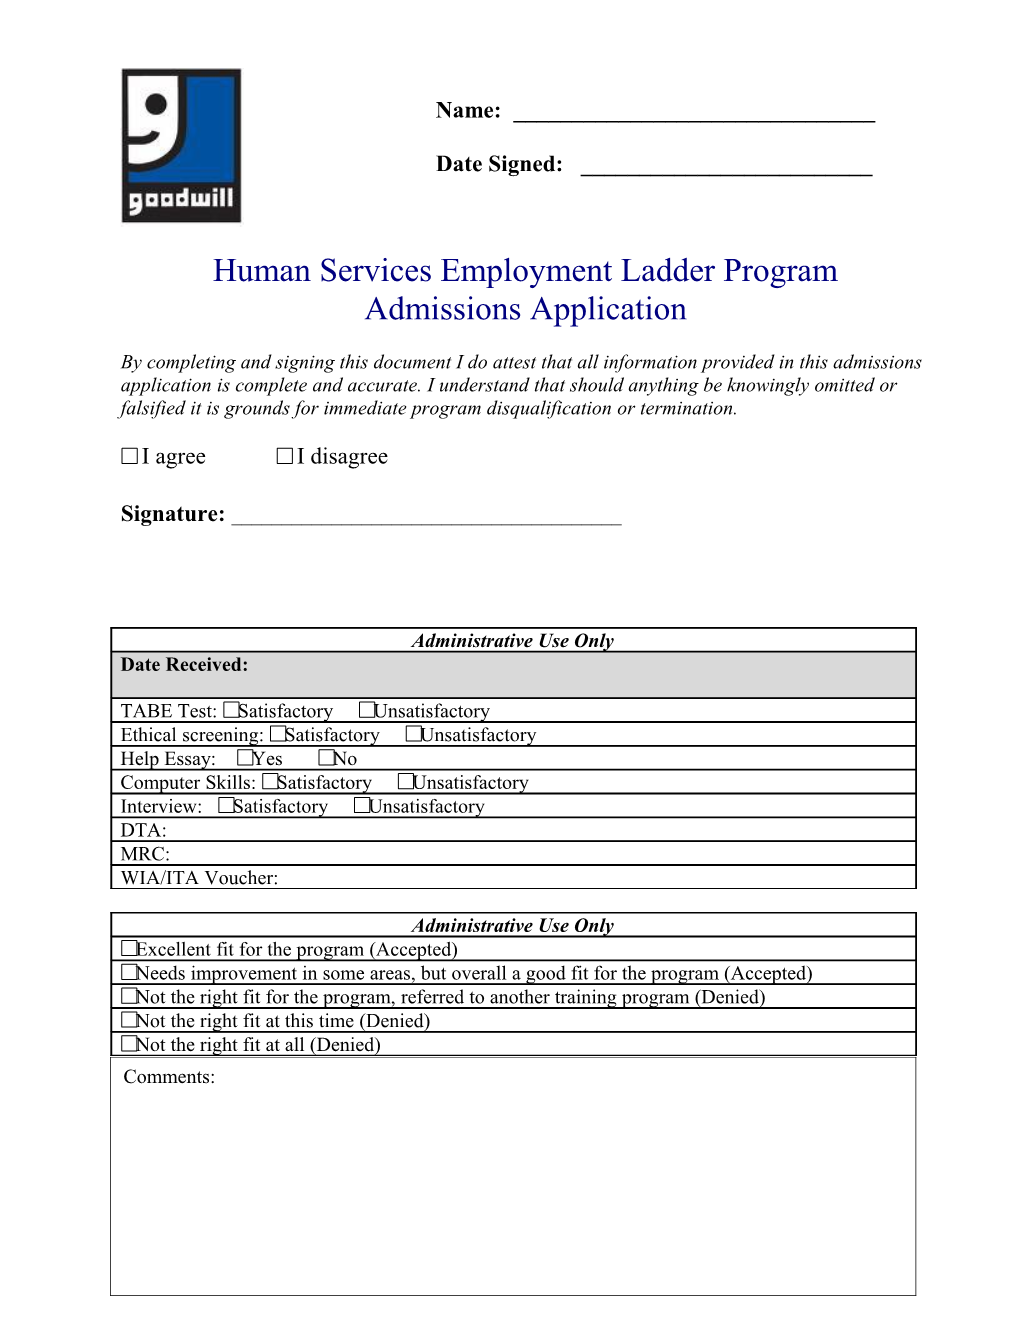 Human Services Employment Ladder Program